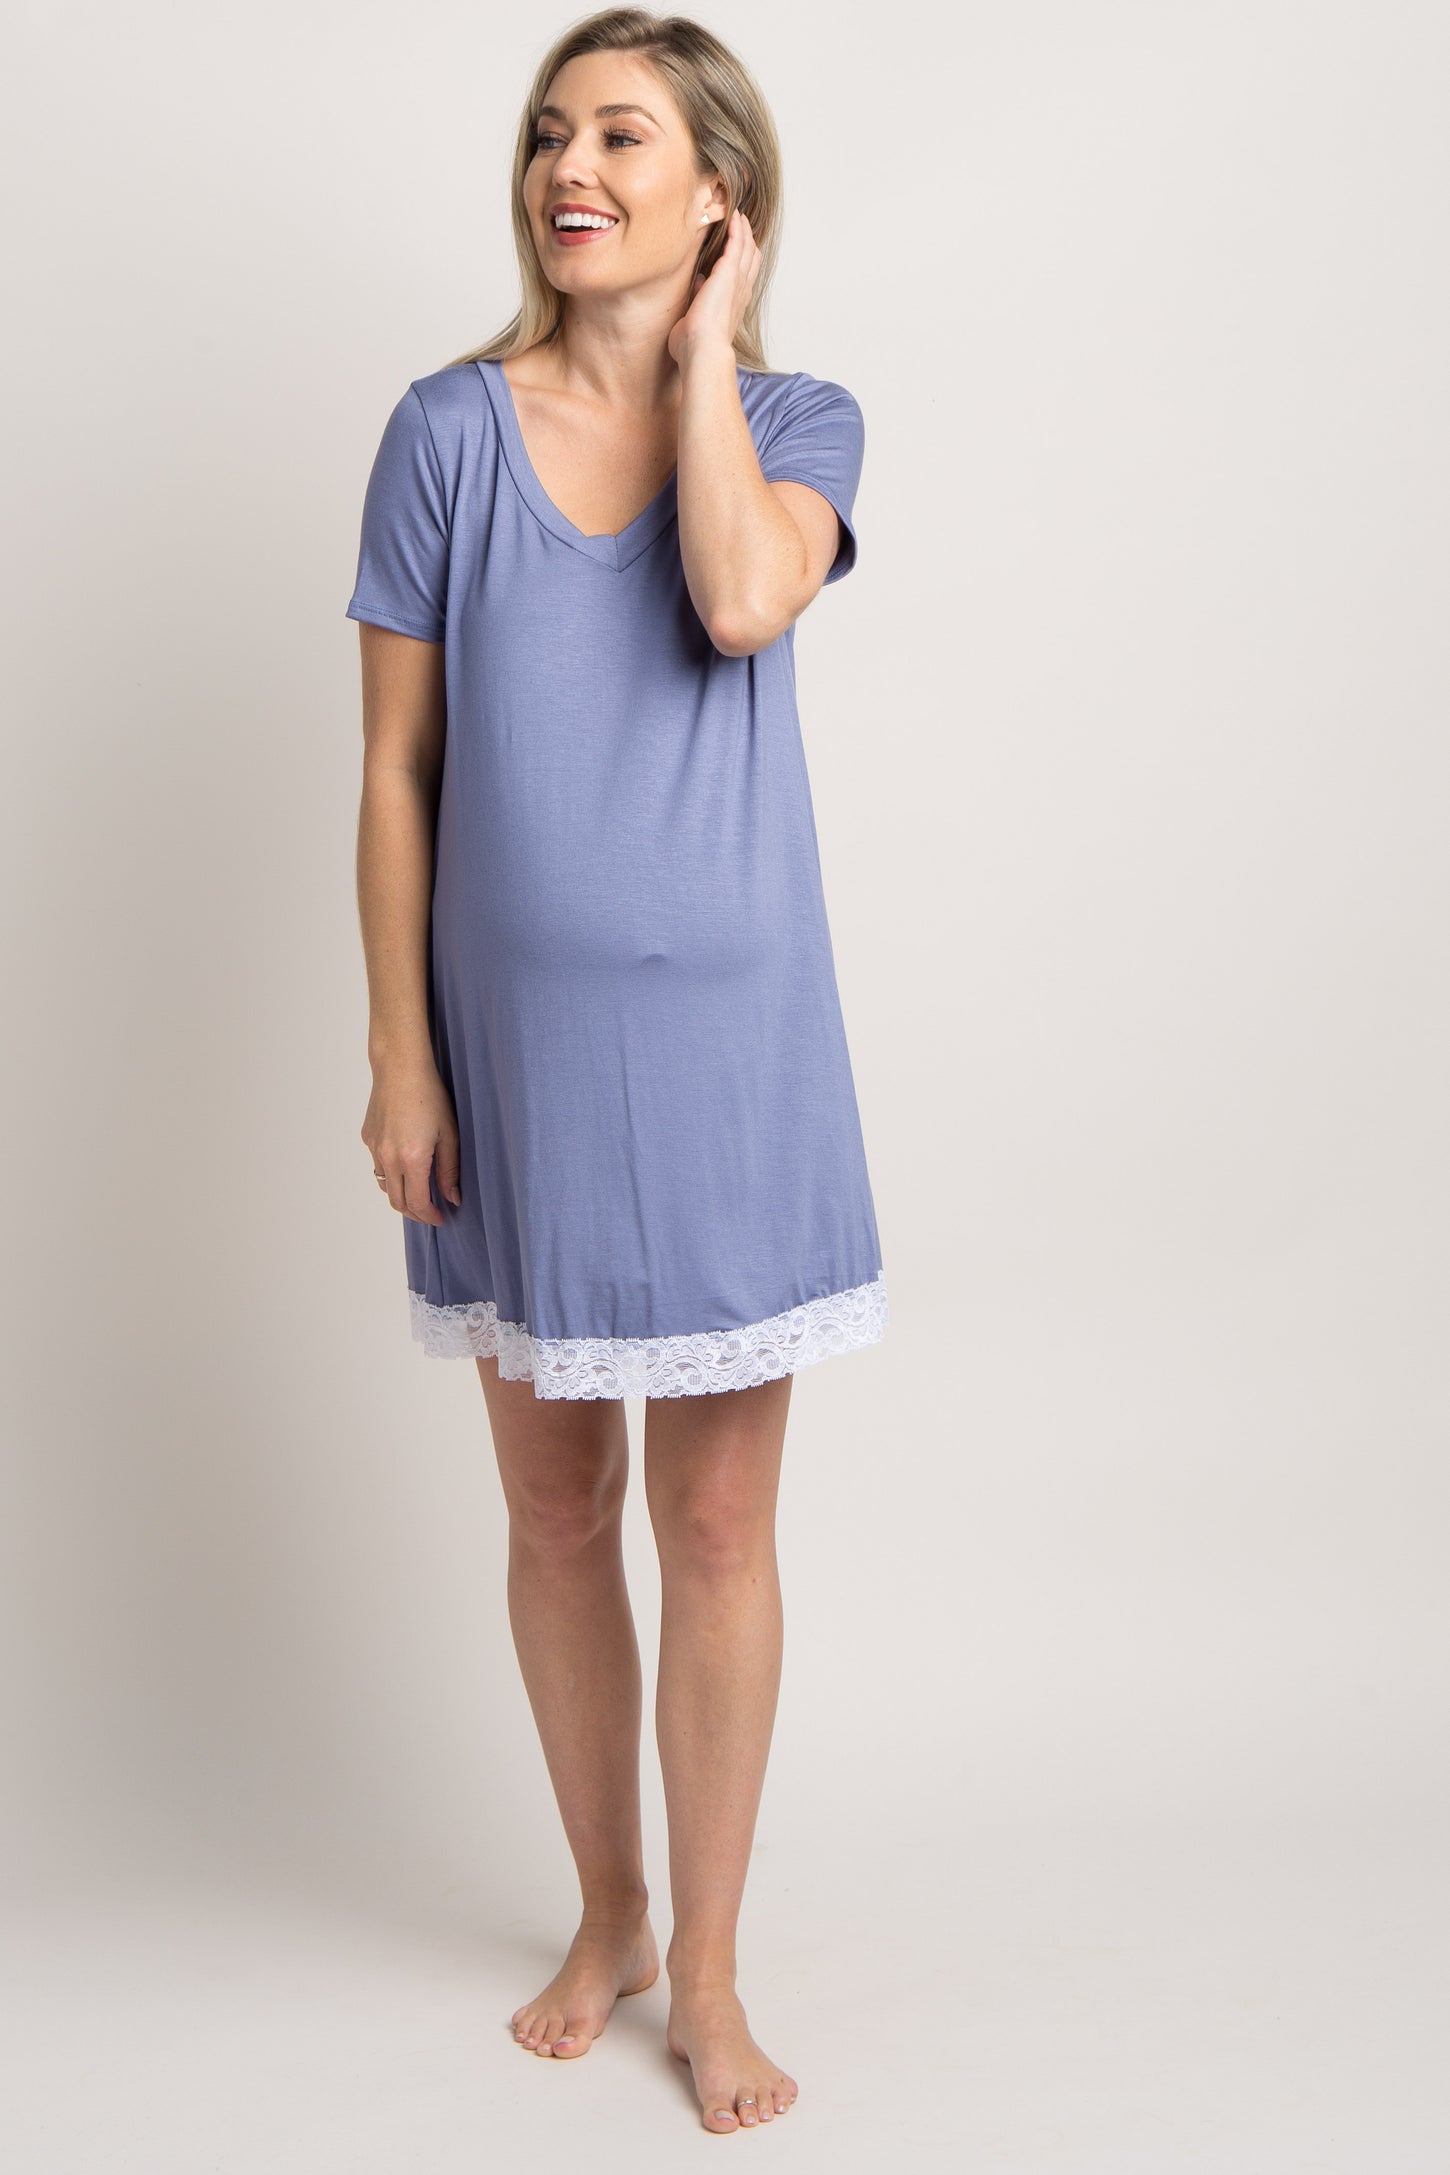 PinkBlush Light Blue Lace Trim V-Neck Maternity Sleep Dress